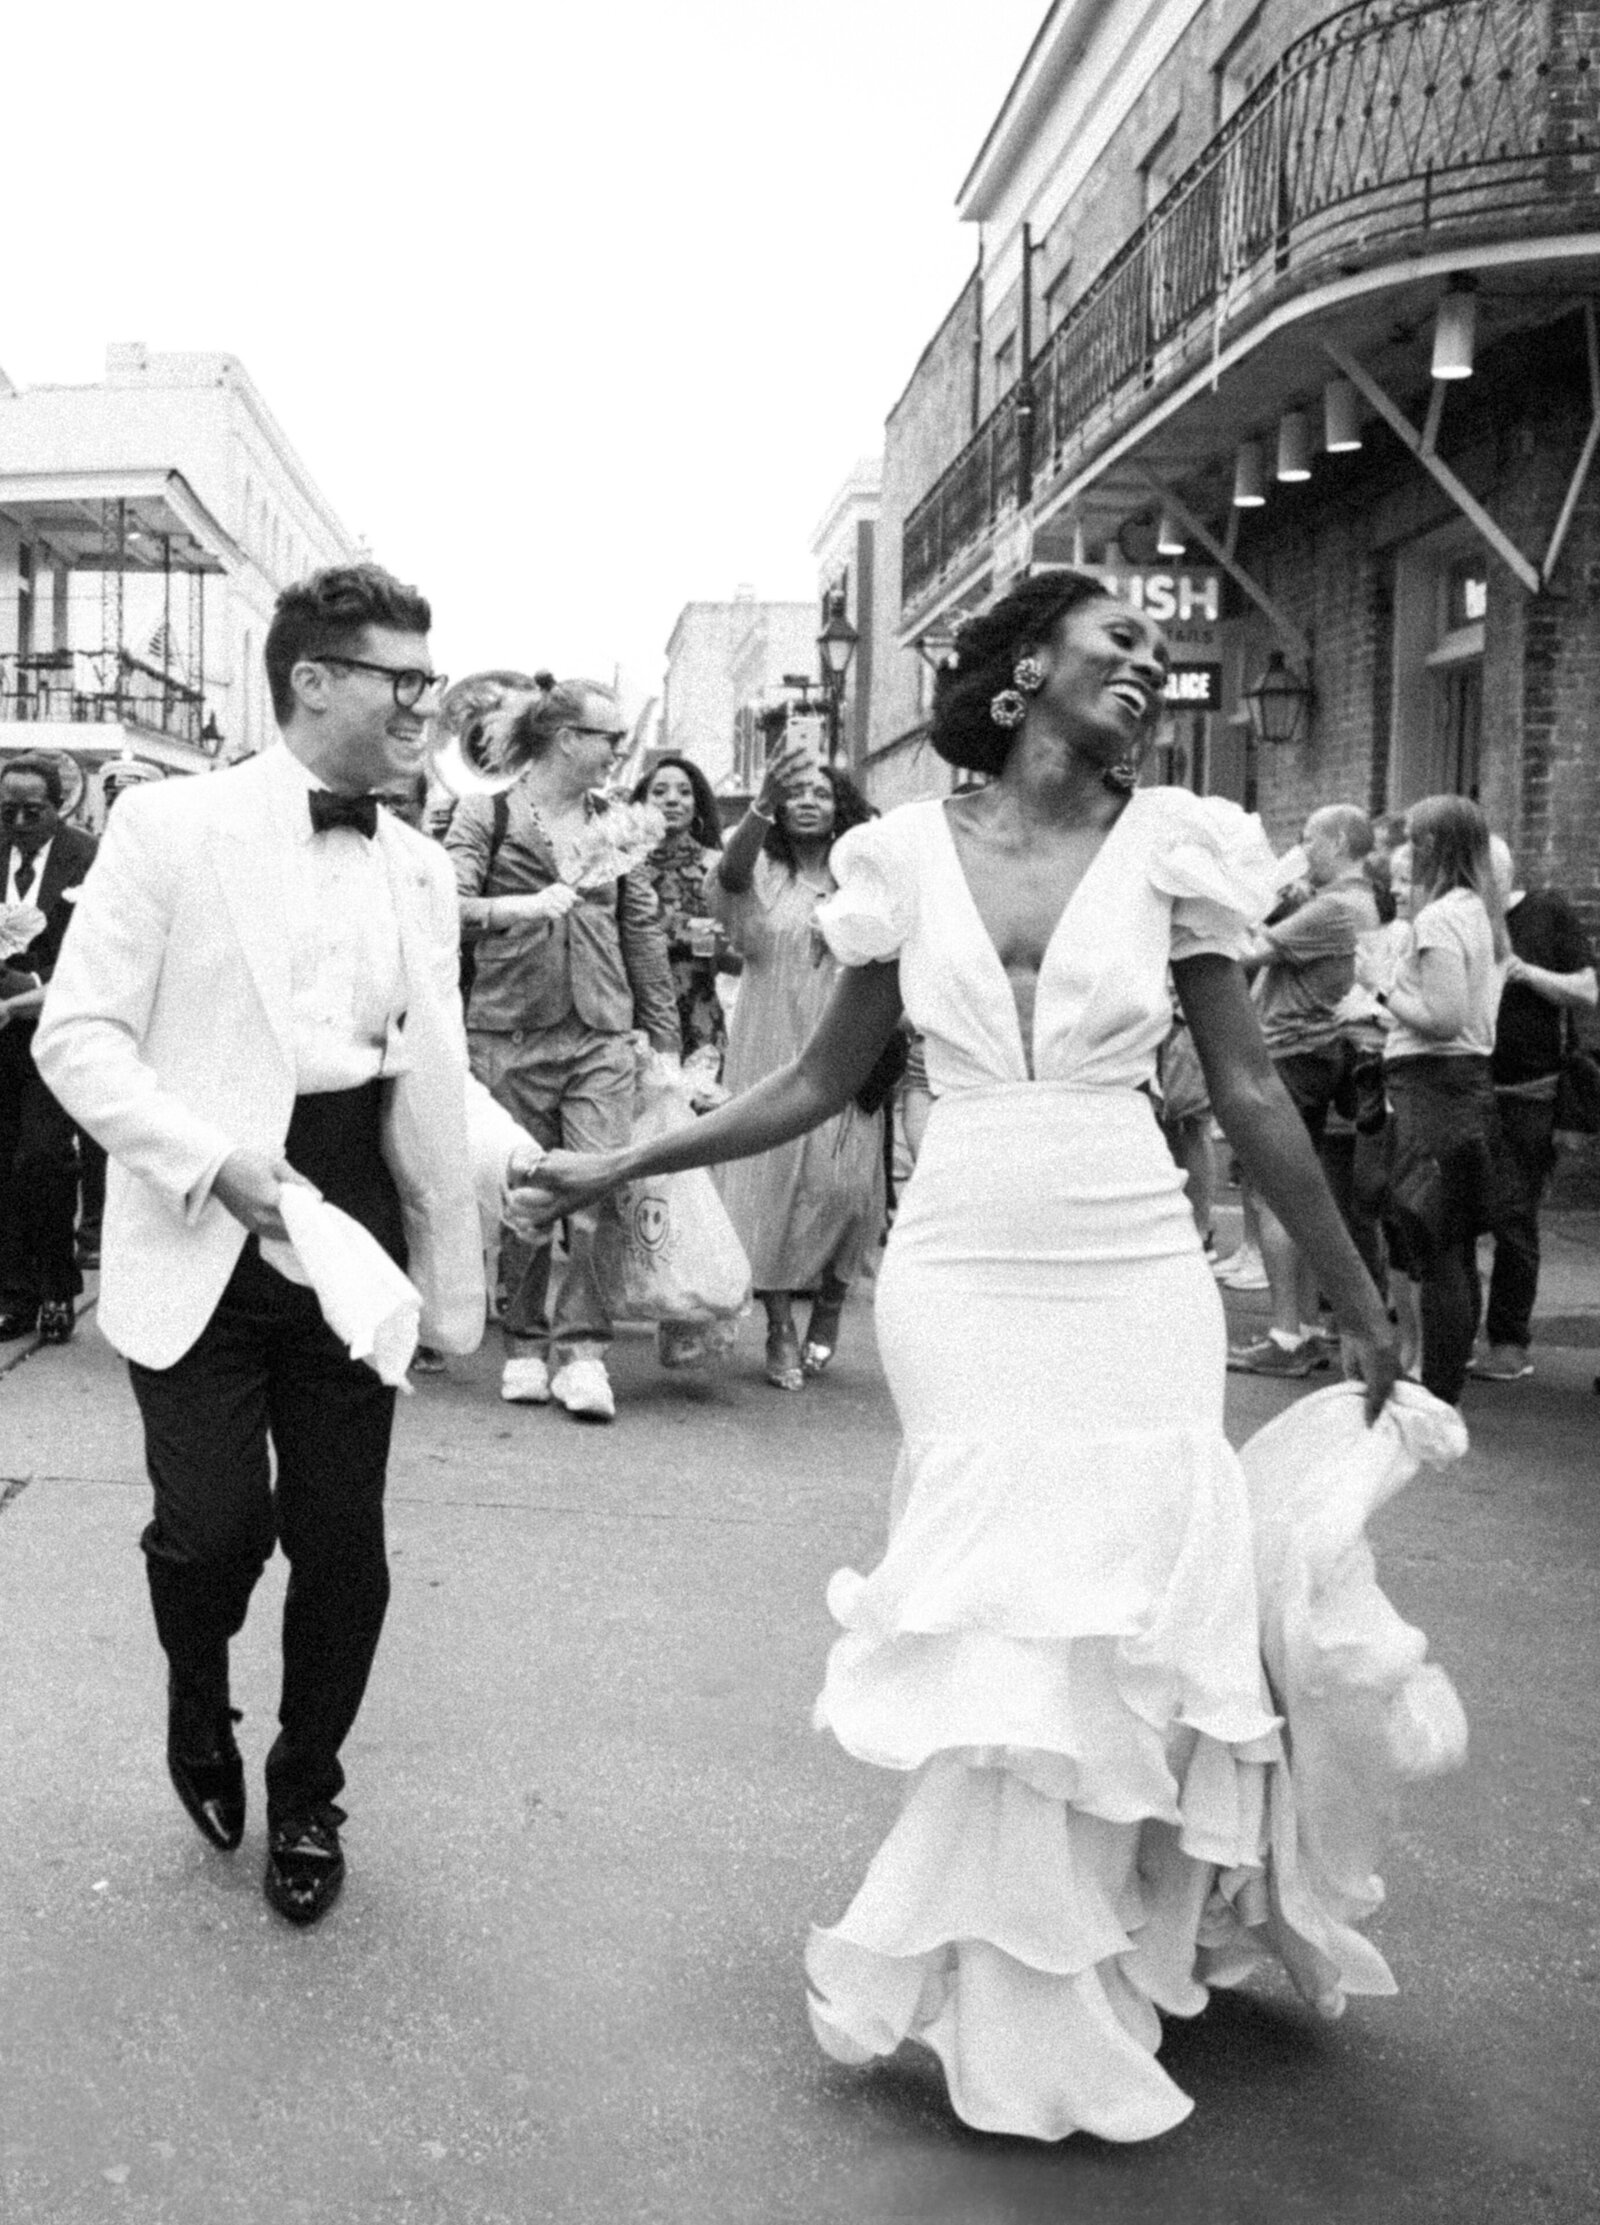 New Orleans second line wedding dress